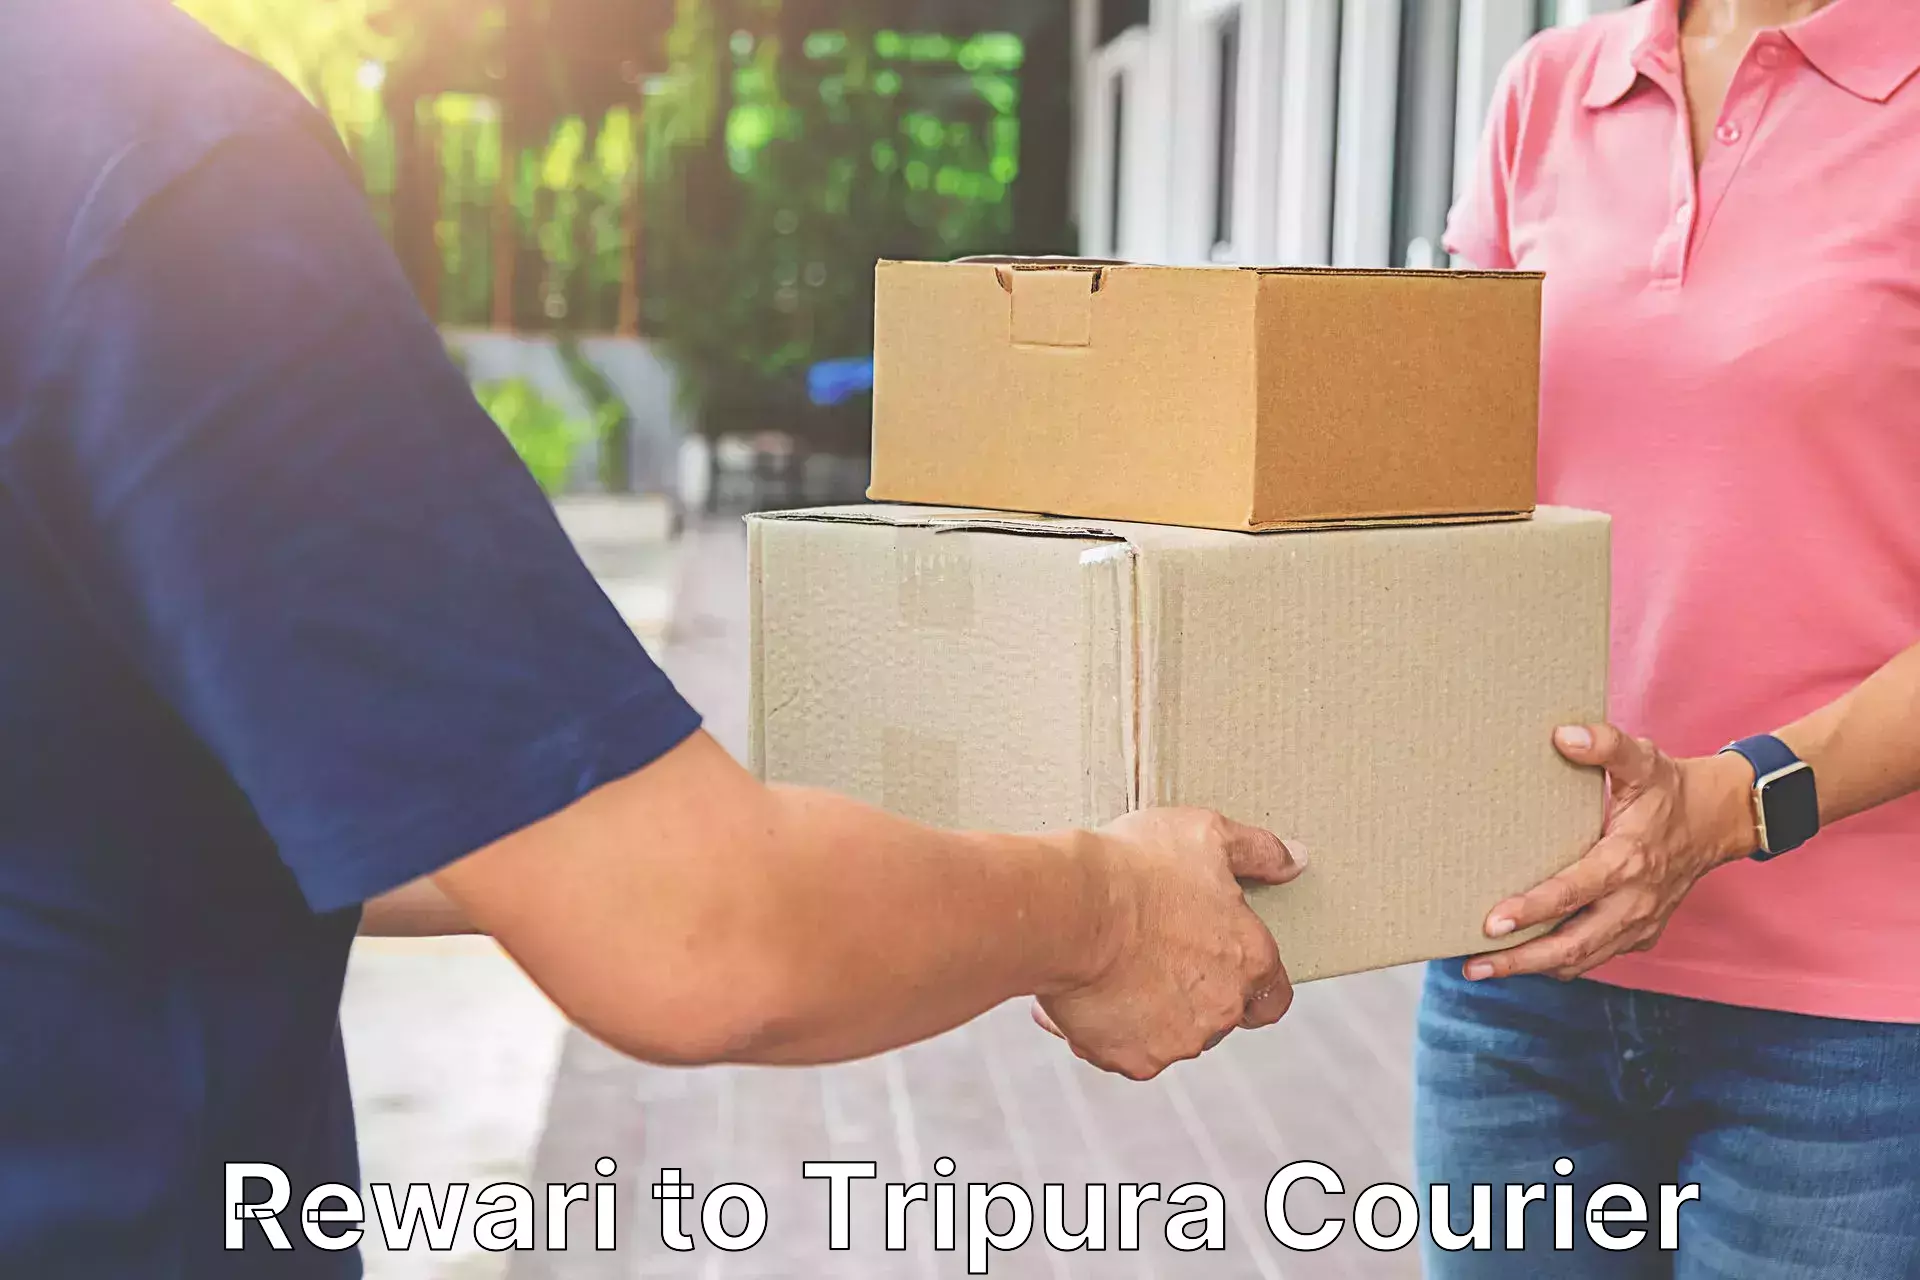 Remote area delivery Rewari to Udaipur Tripura